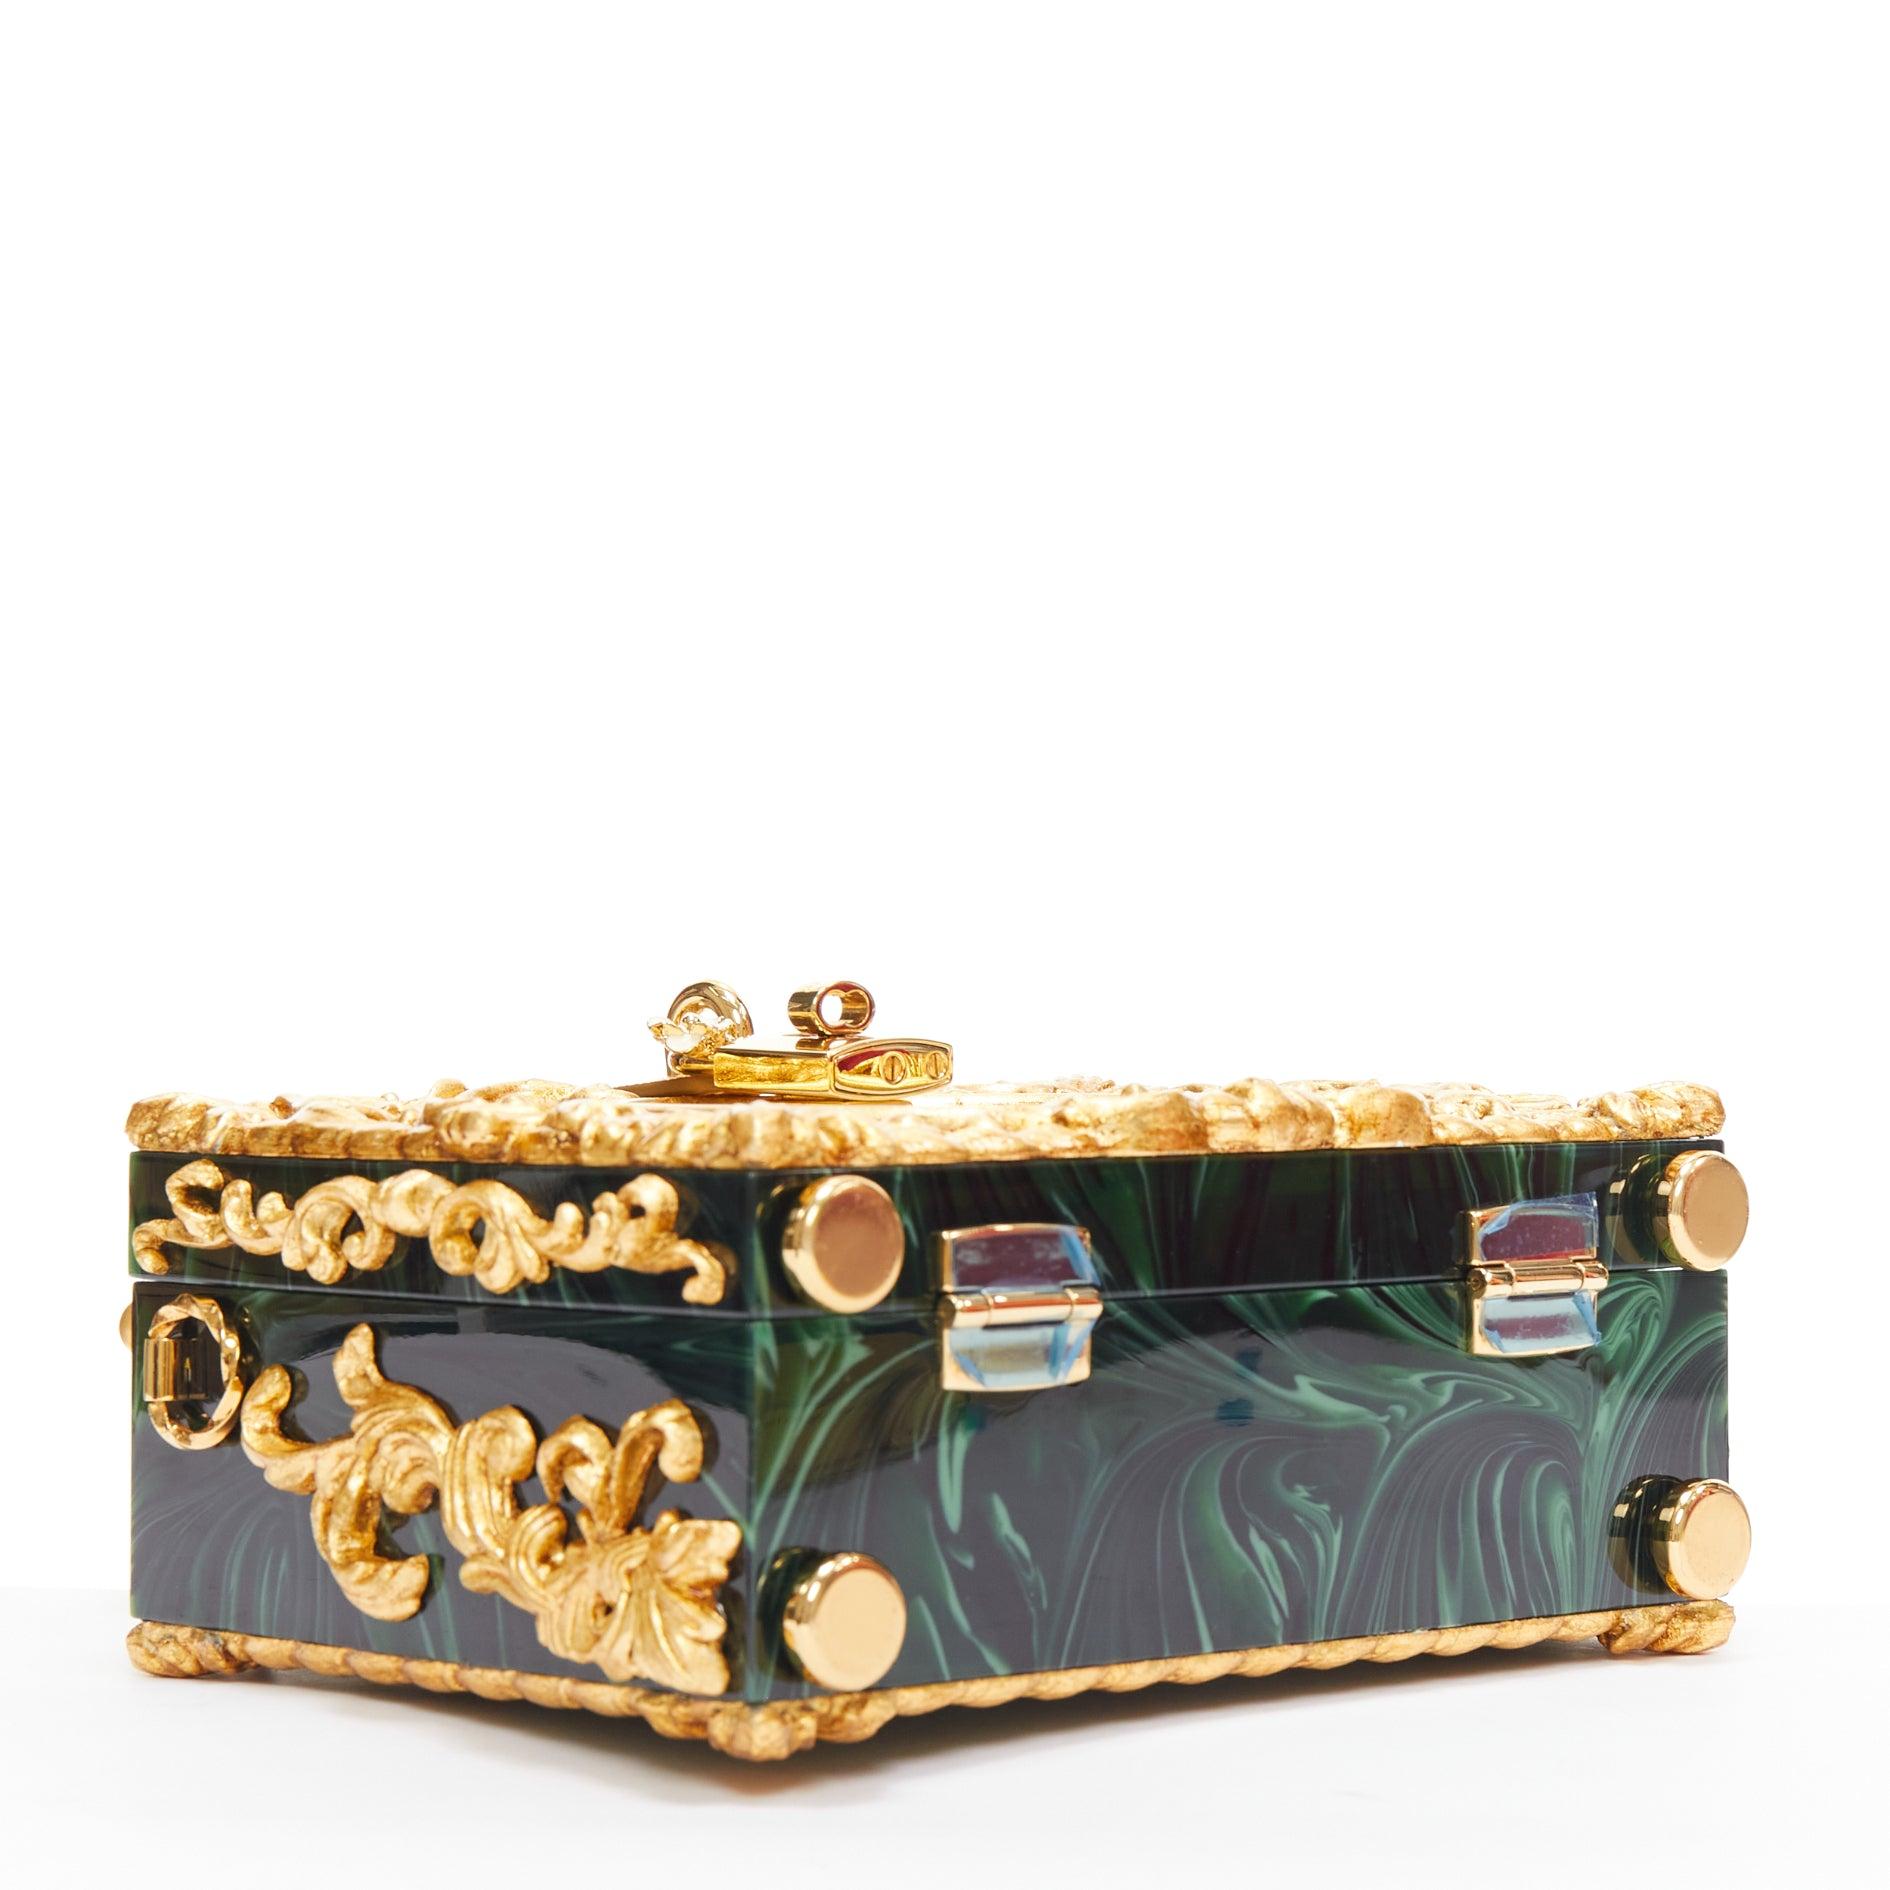 rare DOLCE GABBANA Box Orologio Barocco gold metal green marble resin vanity bag For Sale 2